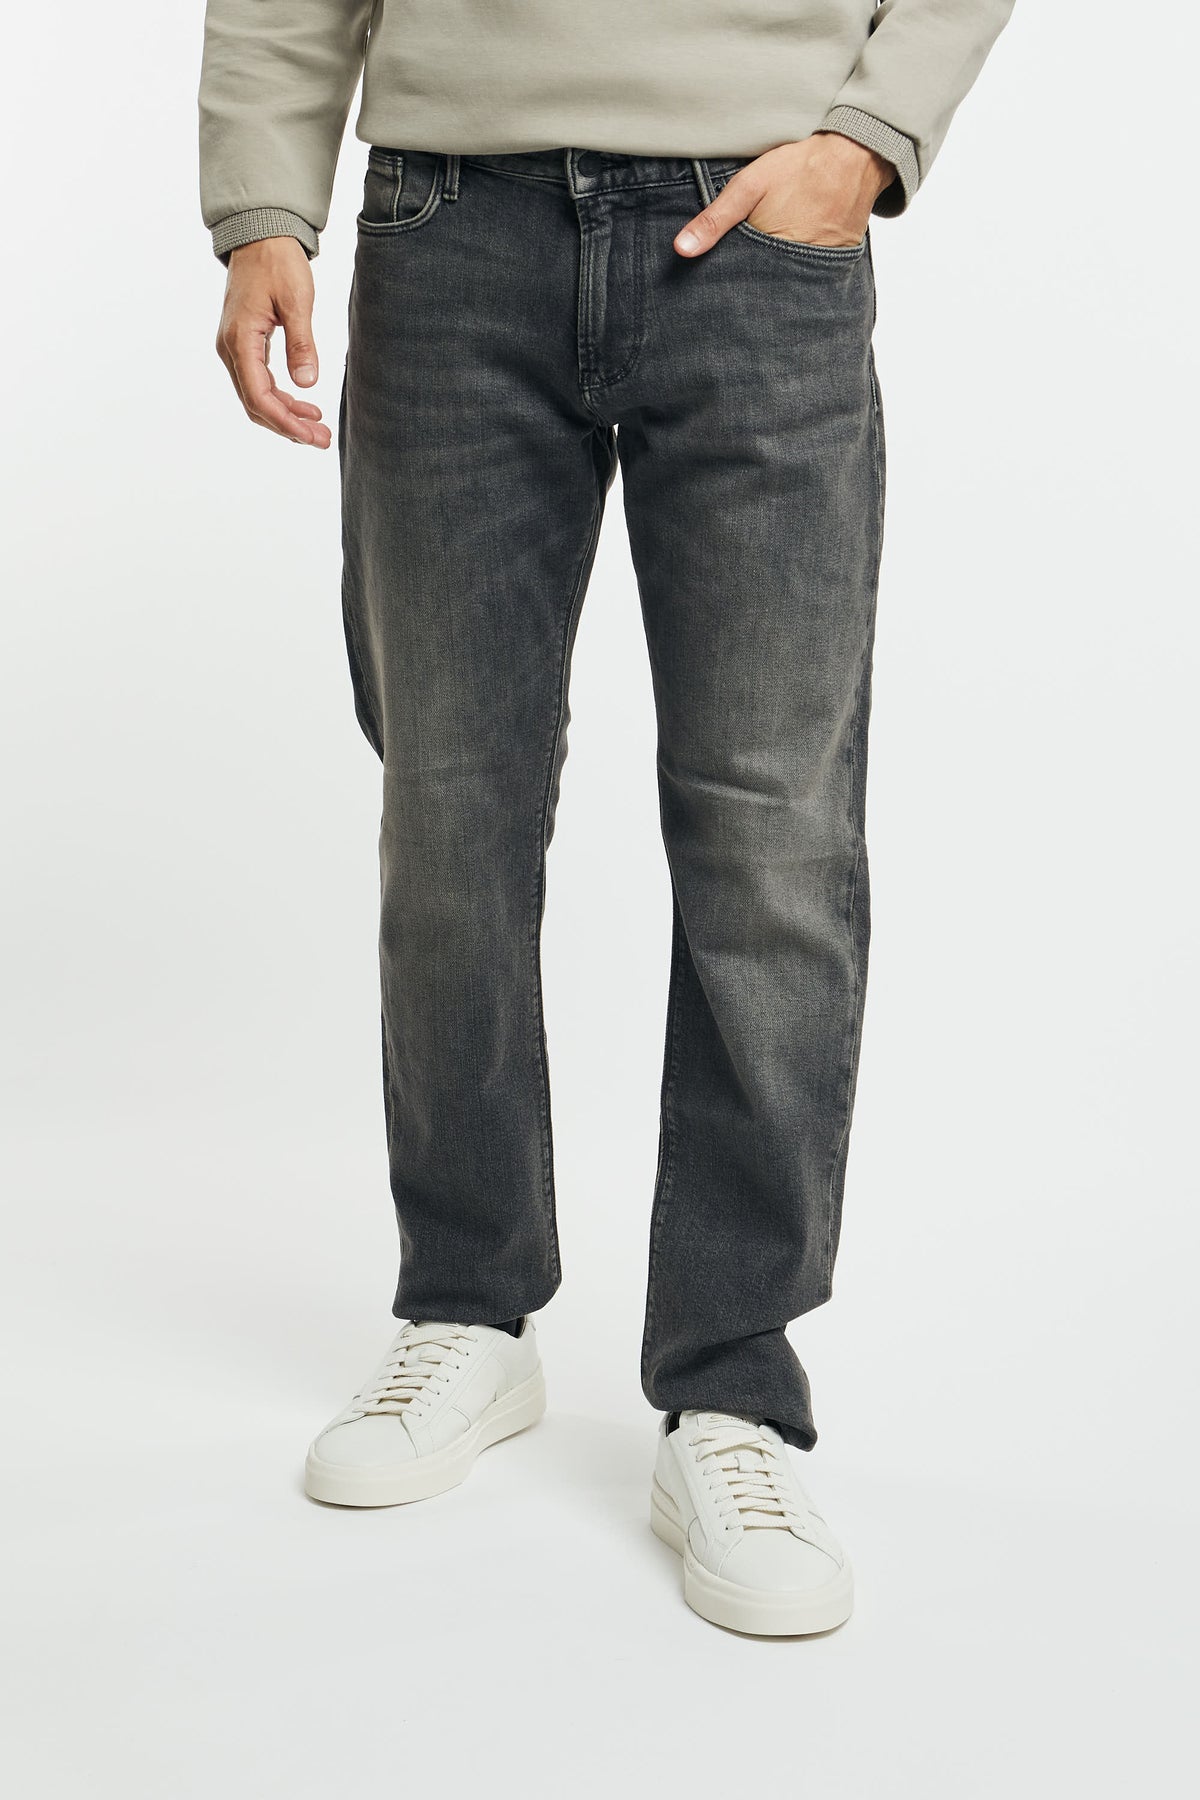 Jeans J06 slim fit in denim effetto vintage